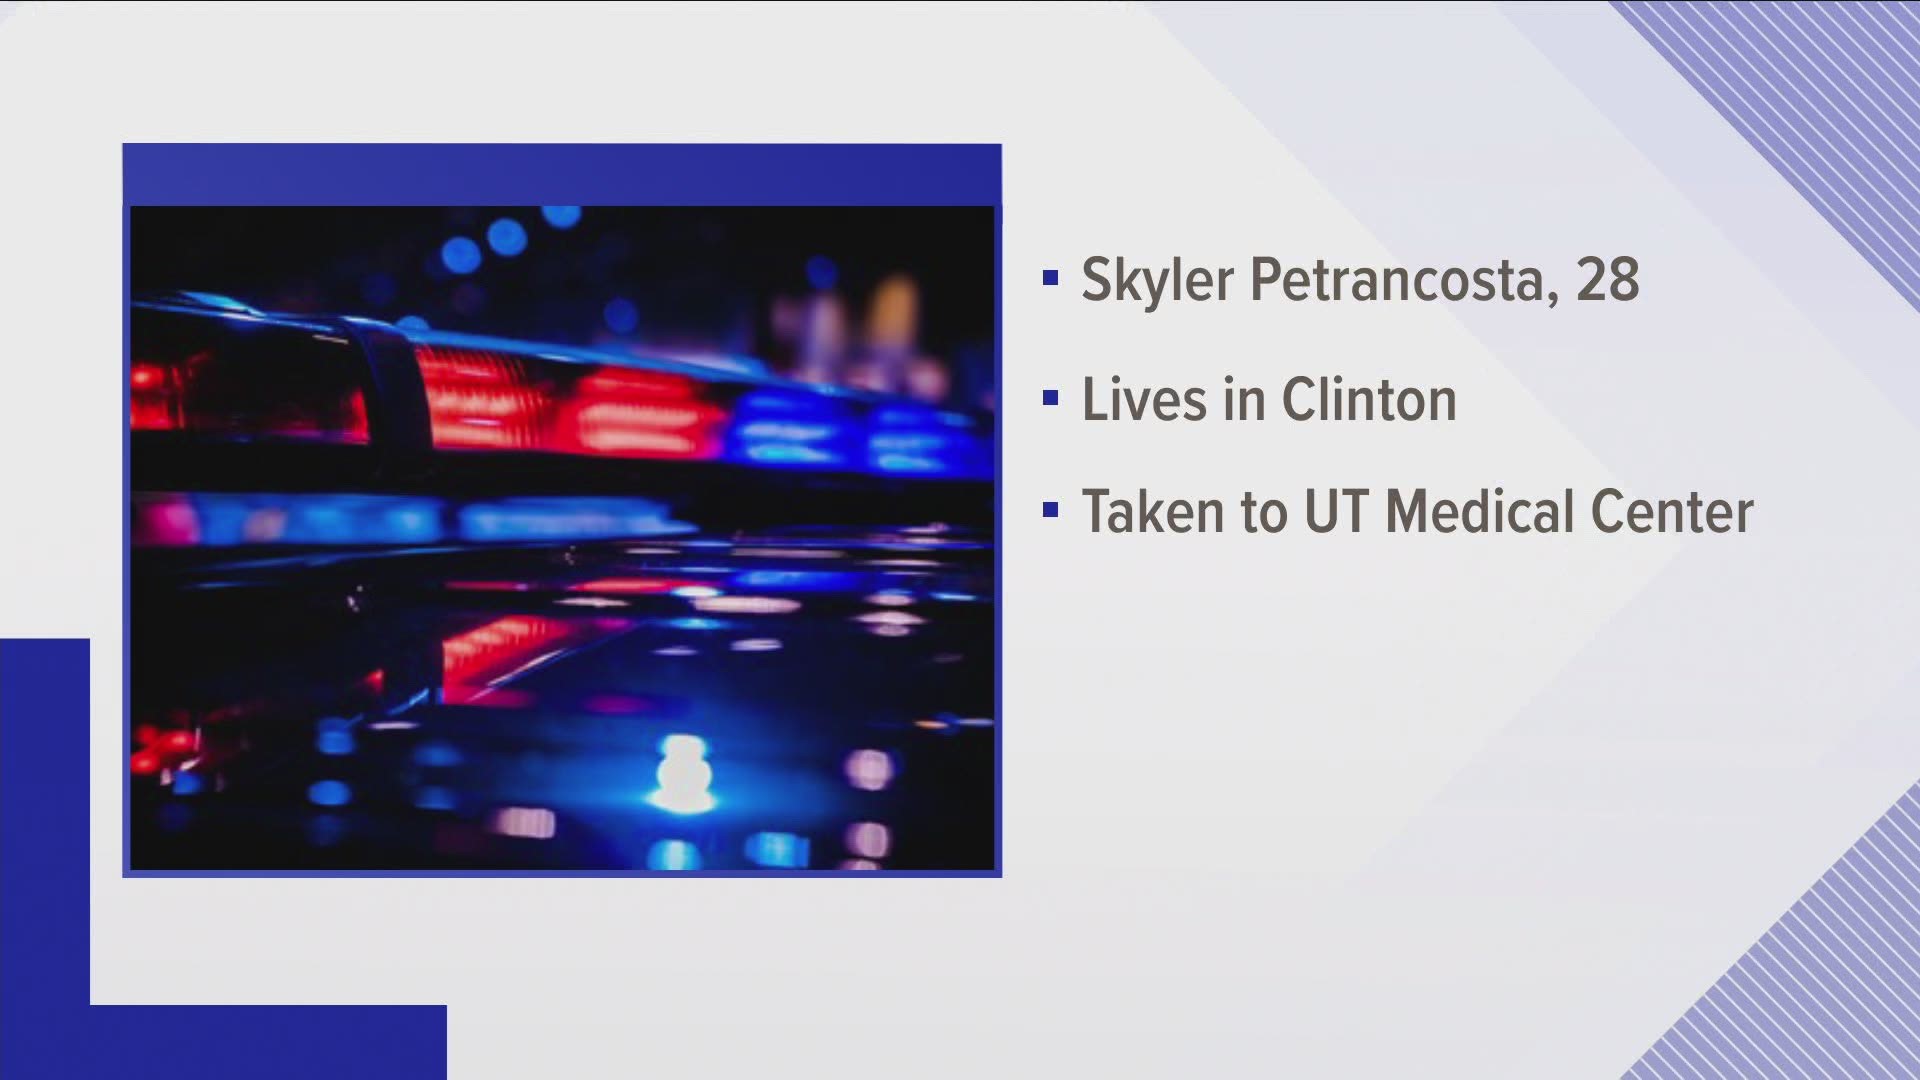 Investigators say it was Skyler Petrancosta who lives in Clinton. Petrancosta was taken to UT Medical Center.